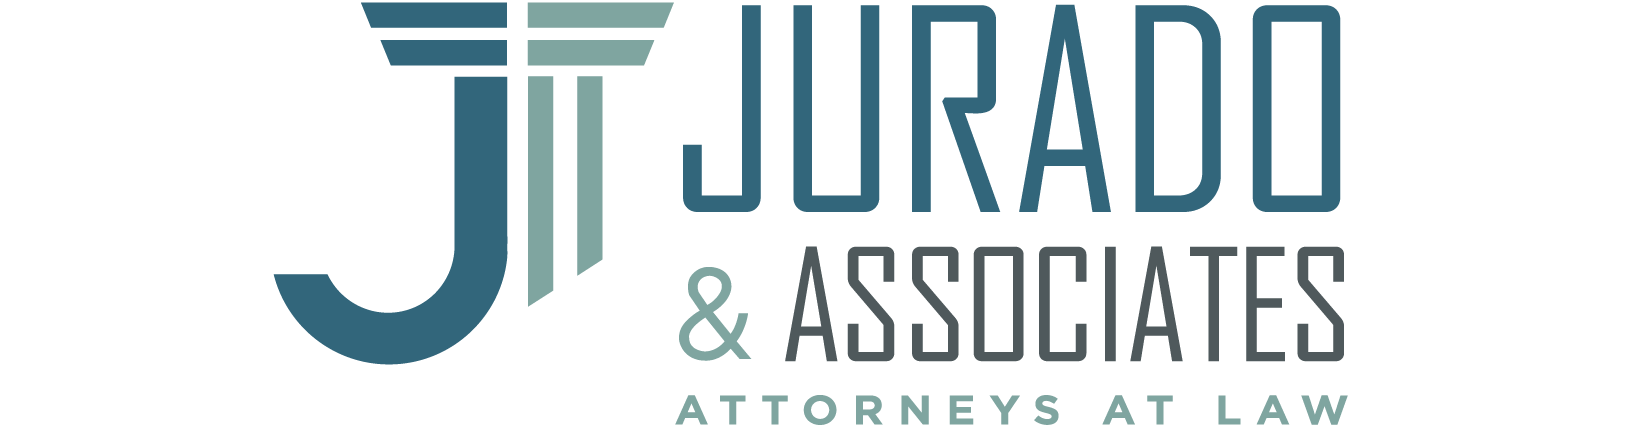 Jurado & Associates, P.A. Business Law, Probate, Real Estate Law, Immigration, Litigation (305) 921-0976